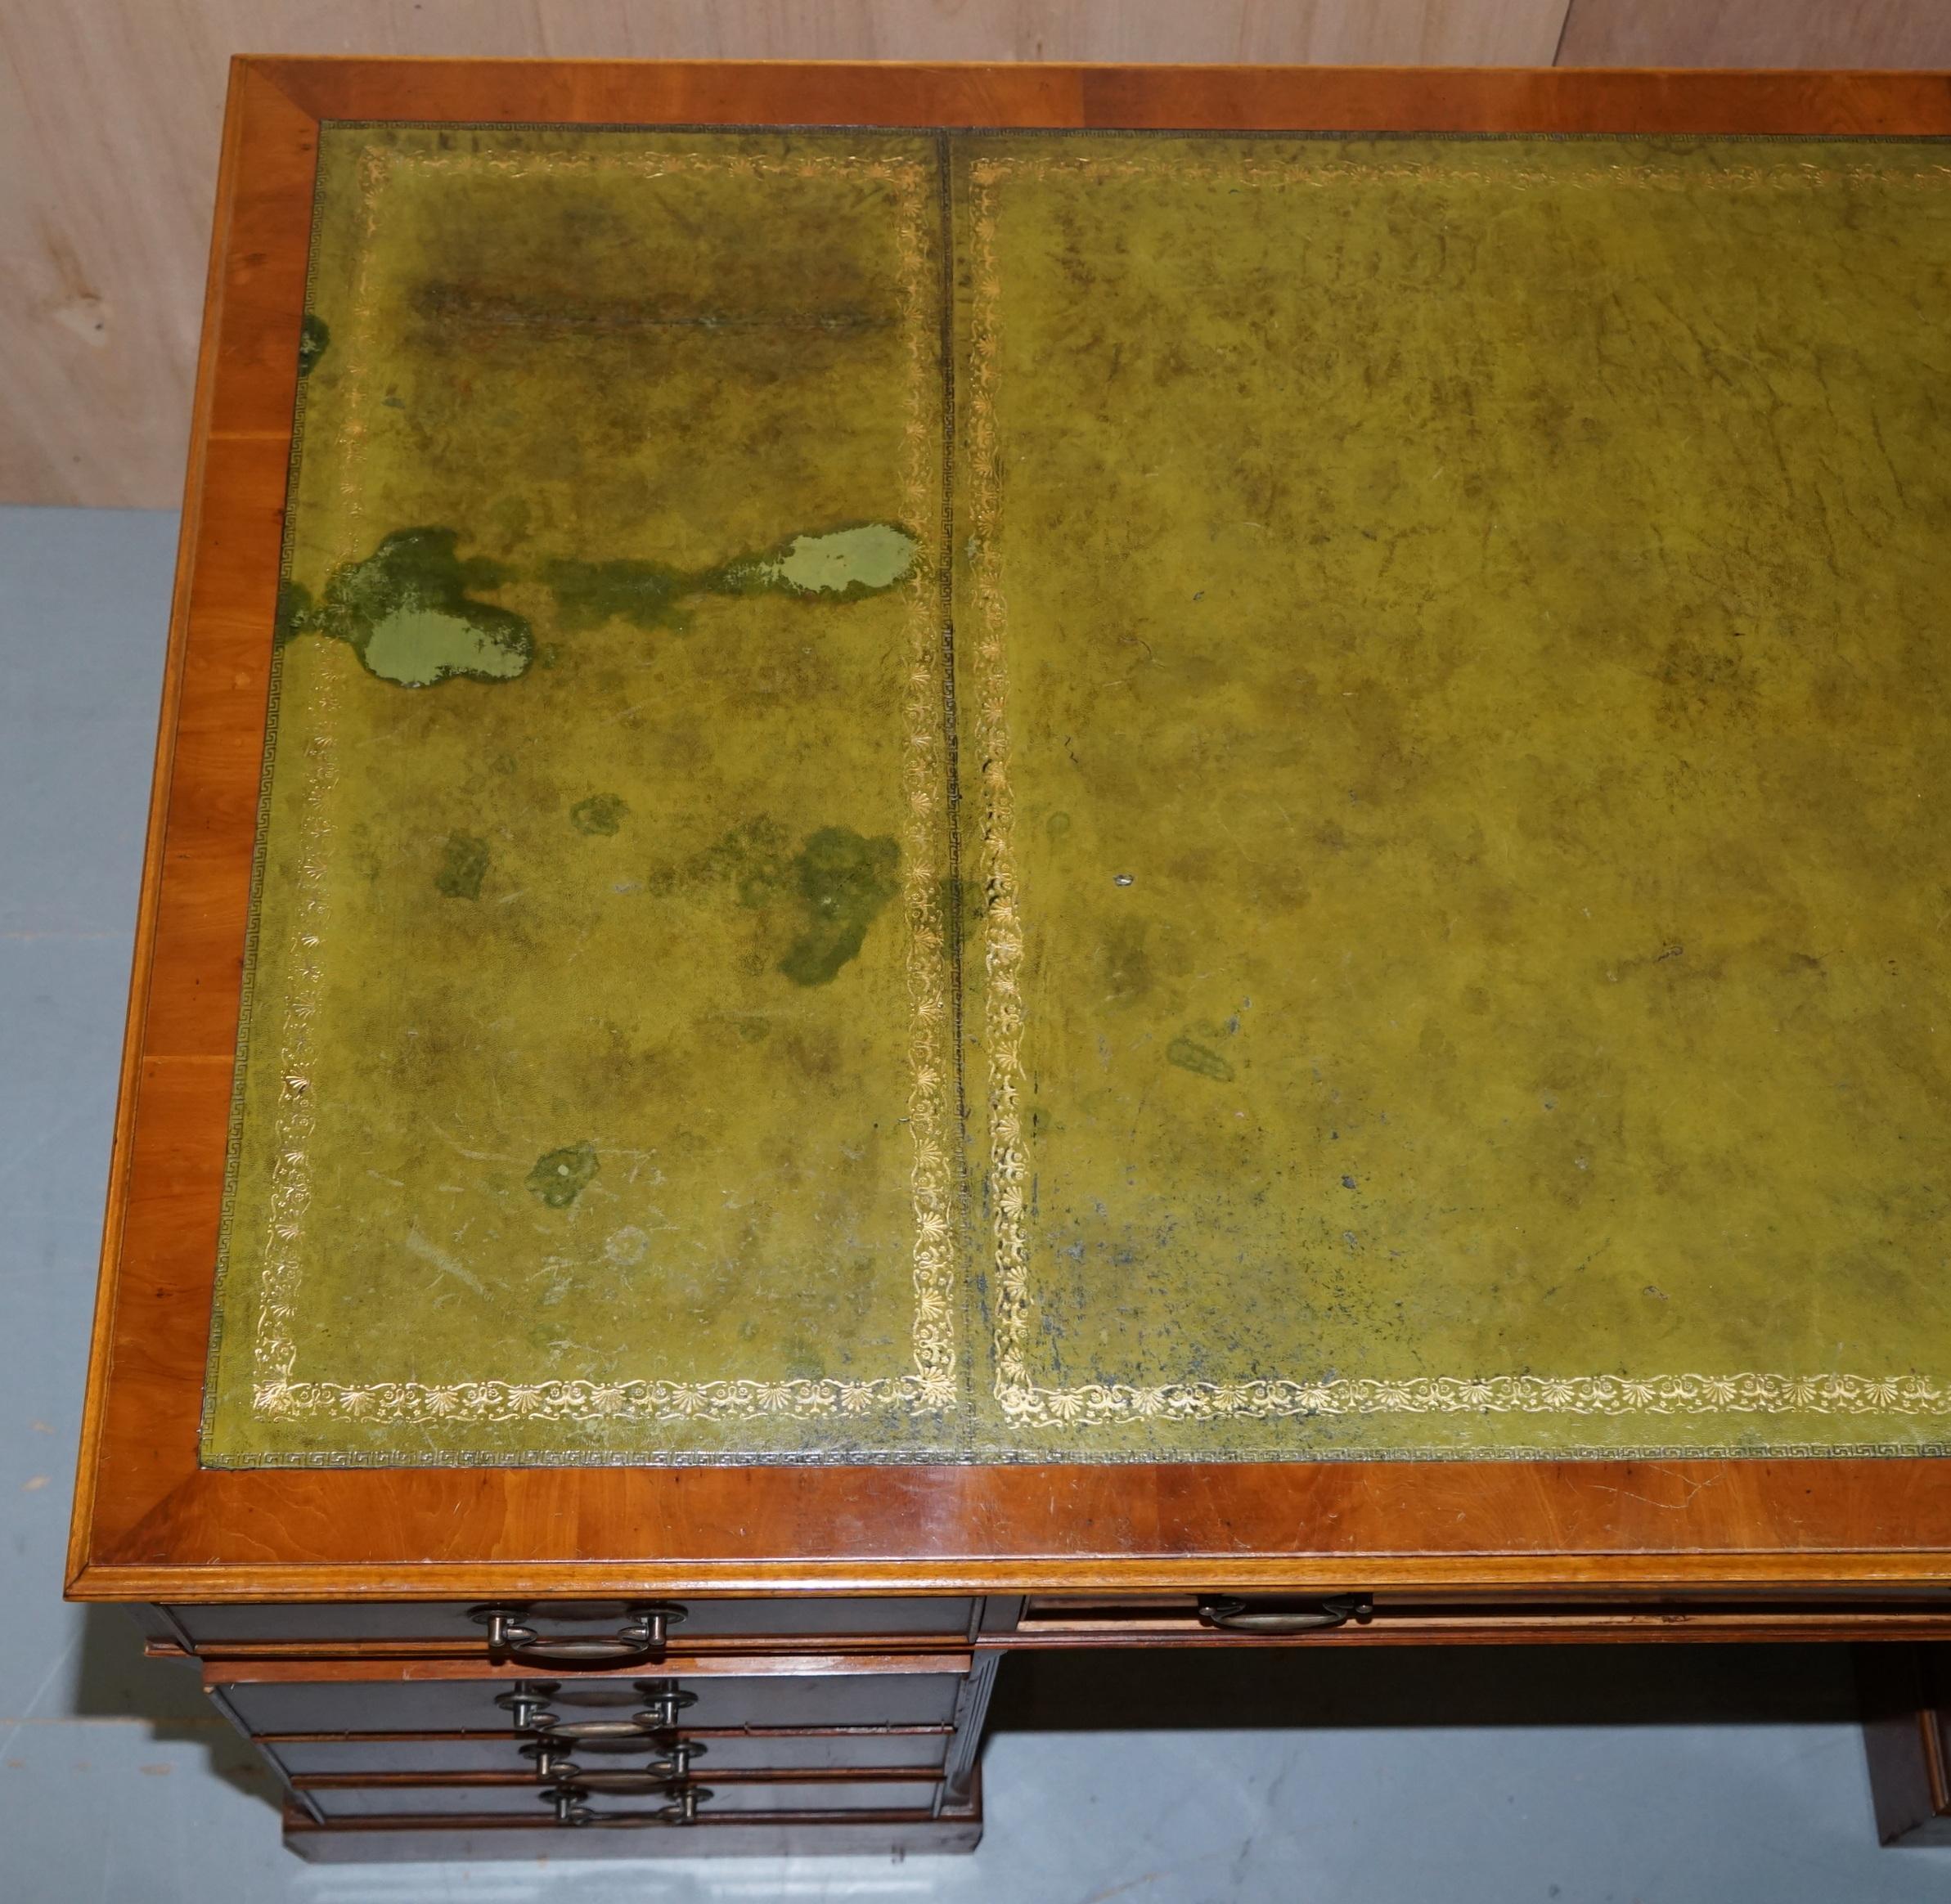 Medium Yew Wood Twin Pedestal Partner Desk Green Leather Gold Leaf Embossed Top (Handgefertigt)